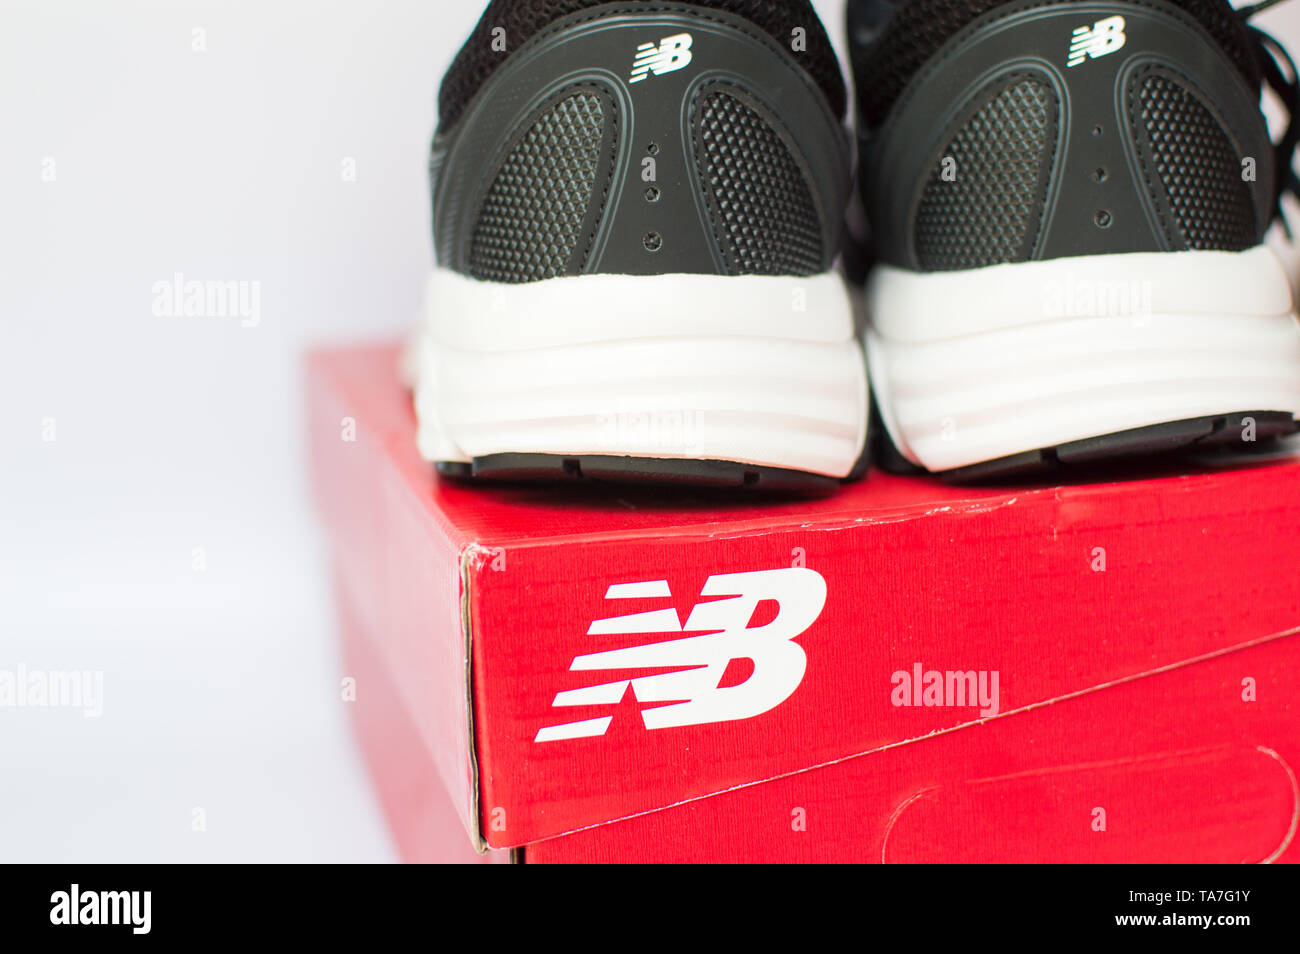 New Balance shoe Stock Photo - Alamy